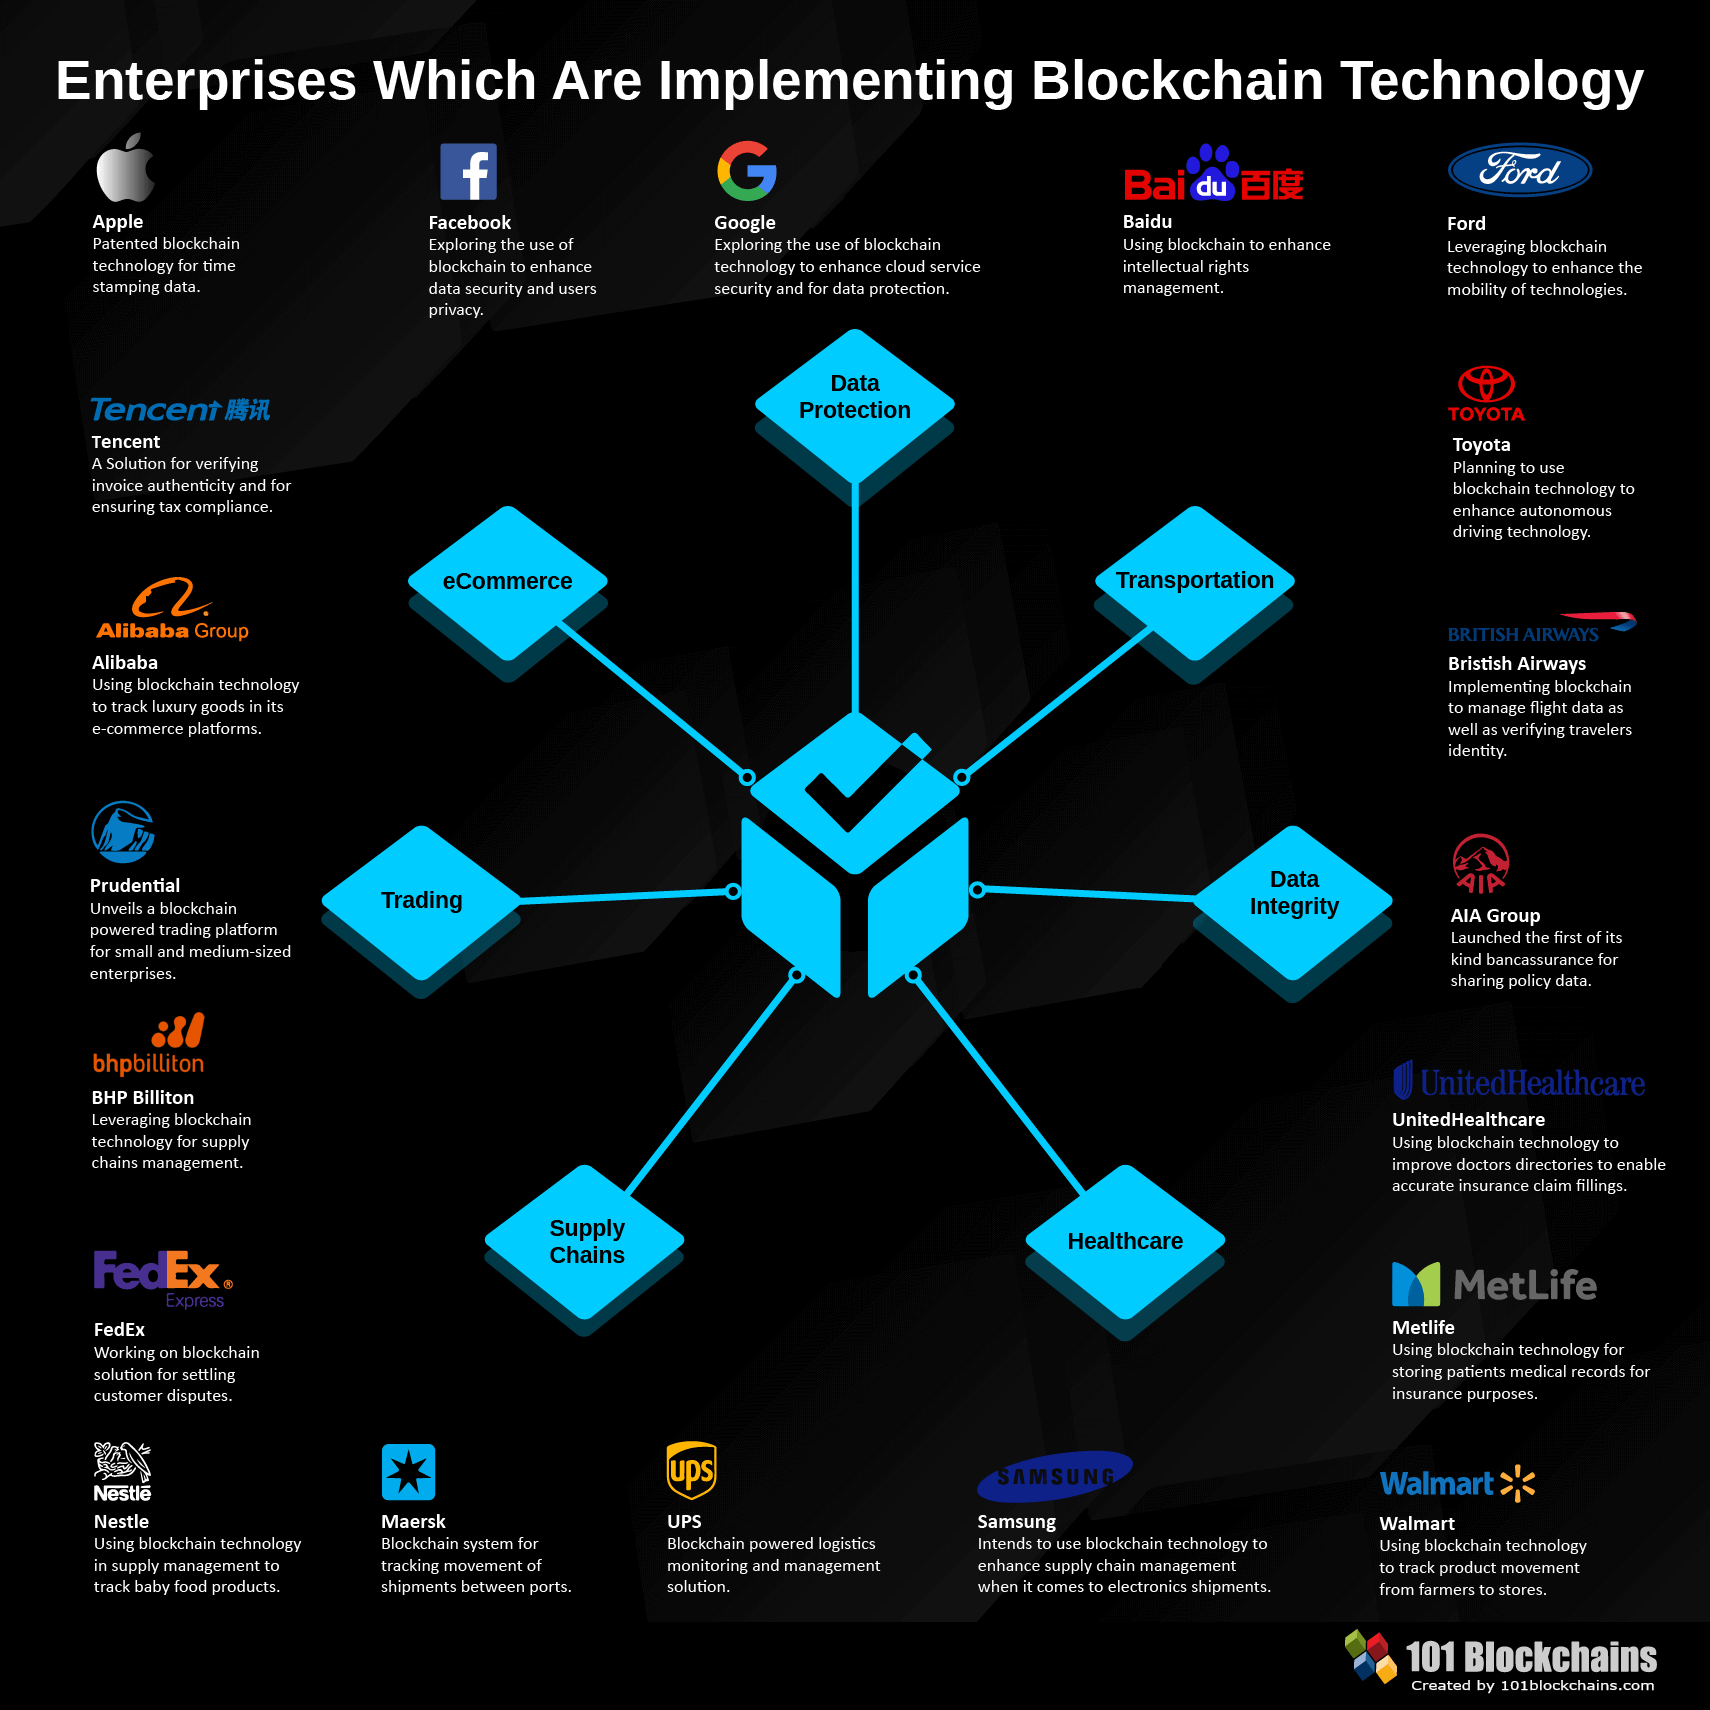 Enterprises Implementing Blockchain Technology